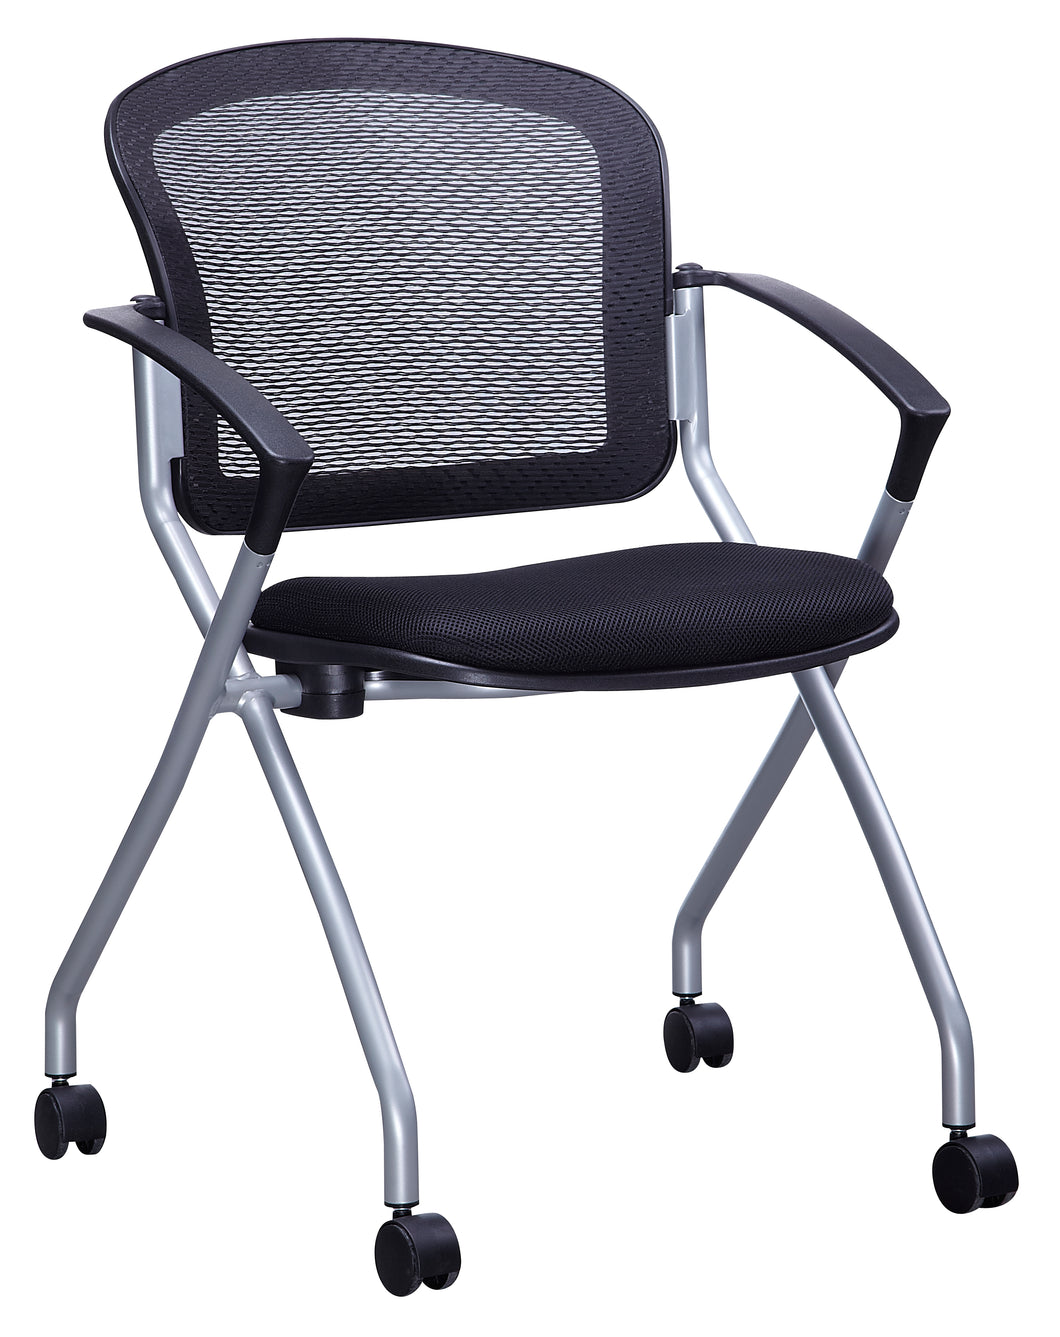 Black Mesh Nesting Chair (Seat Folds Up)